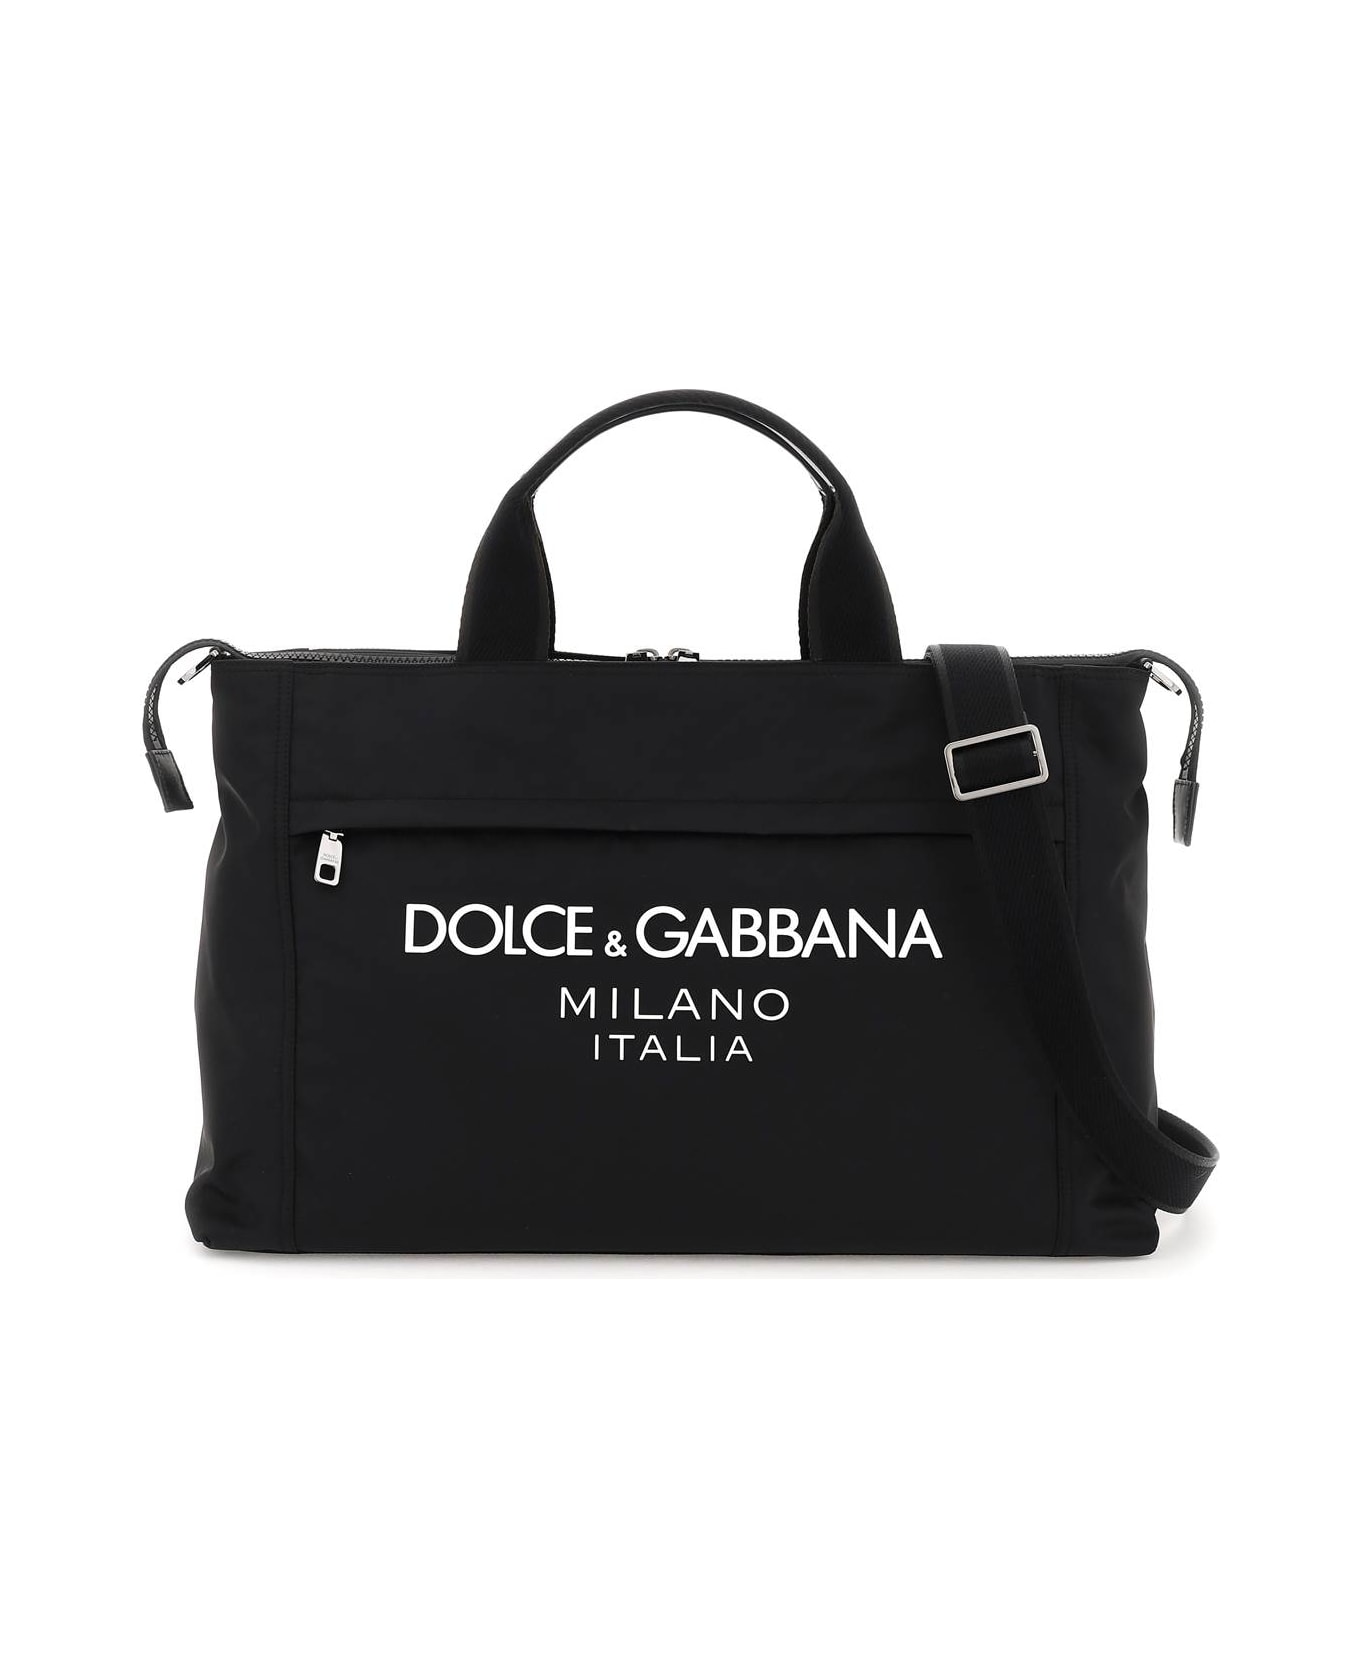 Dolce & Gabbana Nylon Duffle Bag With Logo - Nero/nero